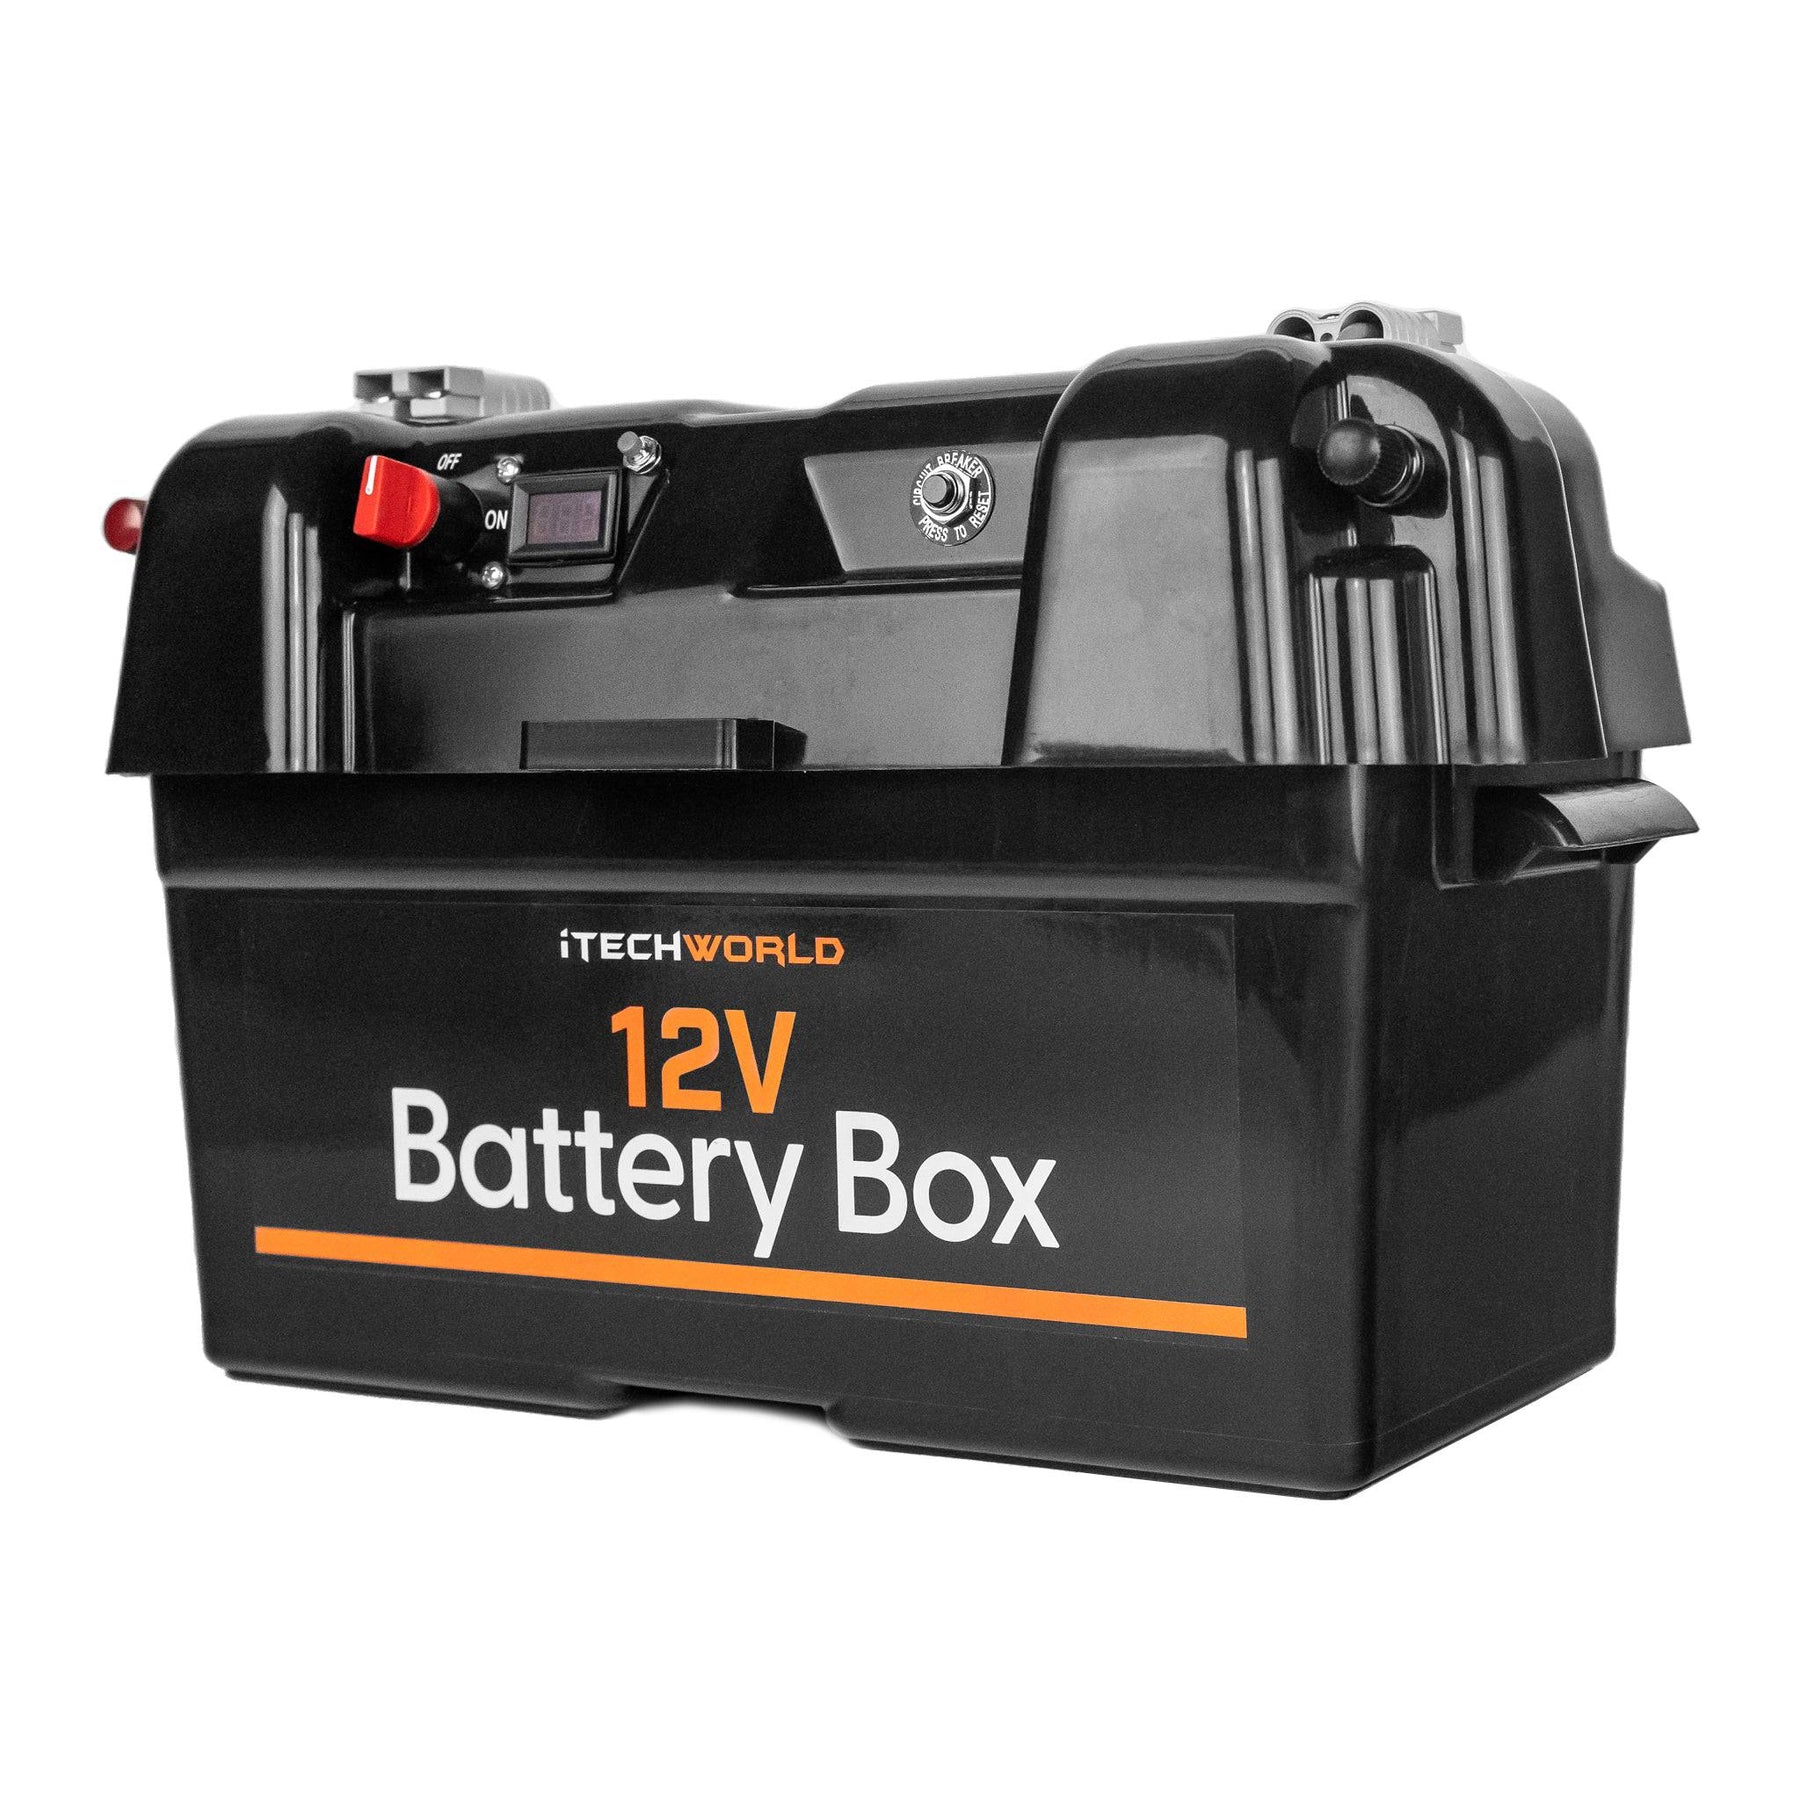 iTechworld Battery Box 12v